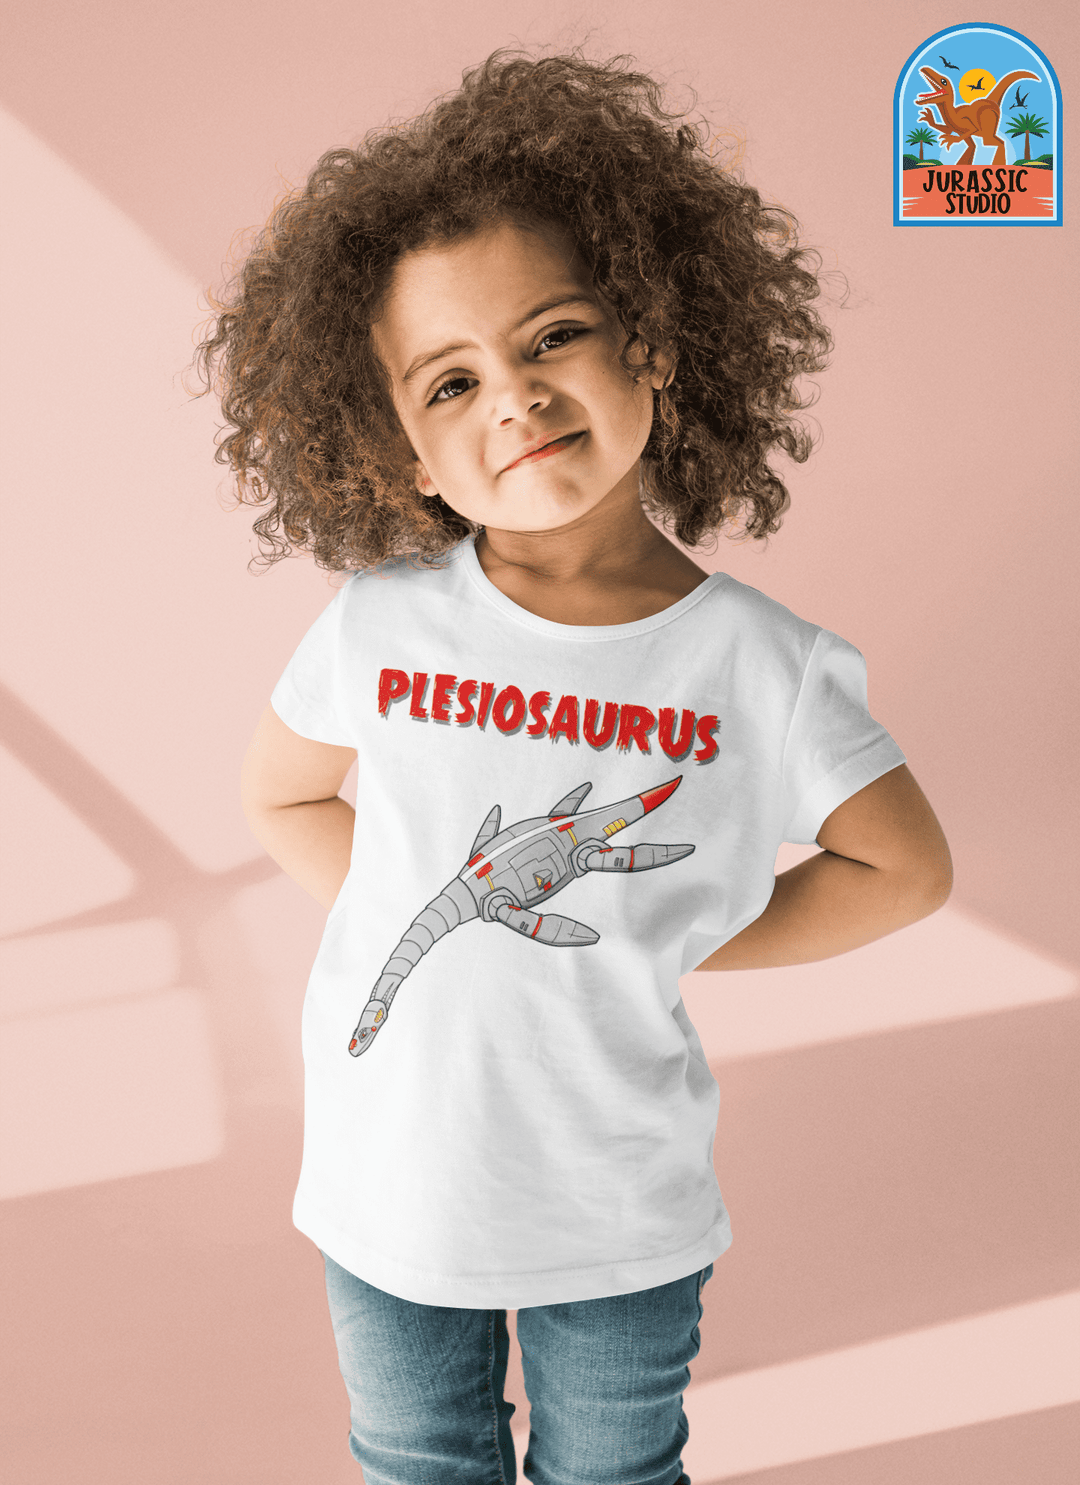 Toddler Robot Plesiosaurus T-Shirt | Jurassic Studio